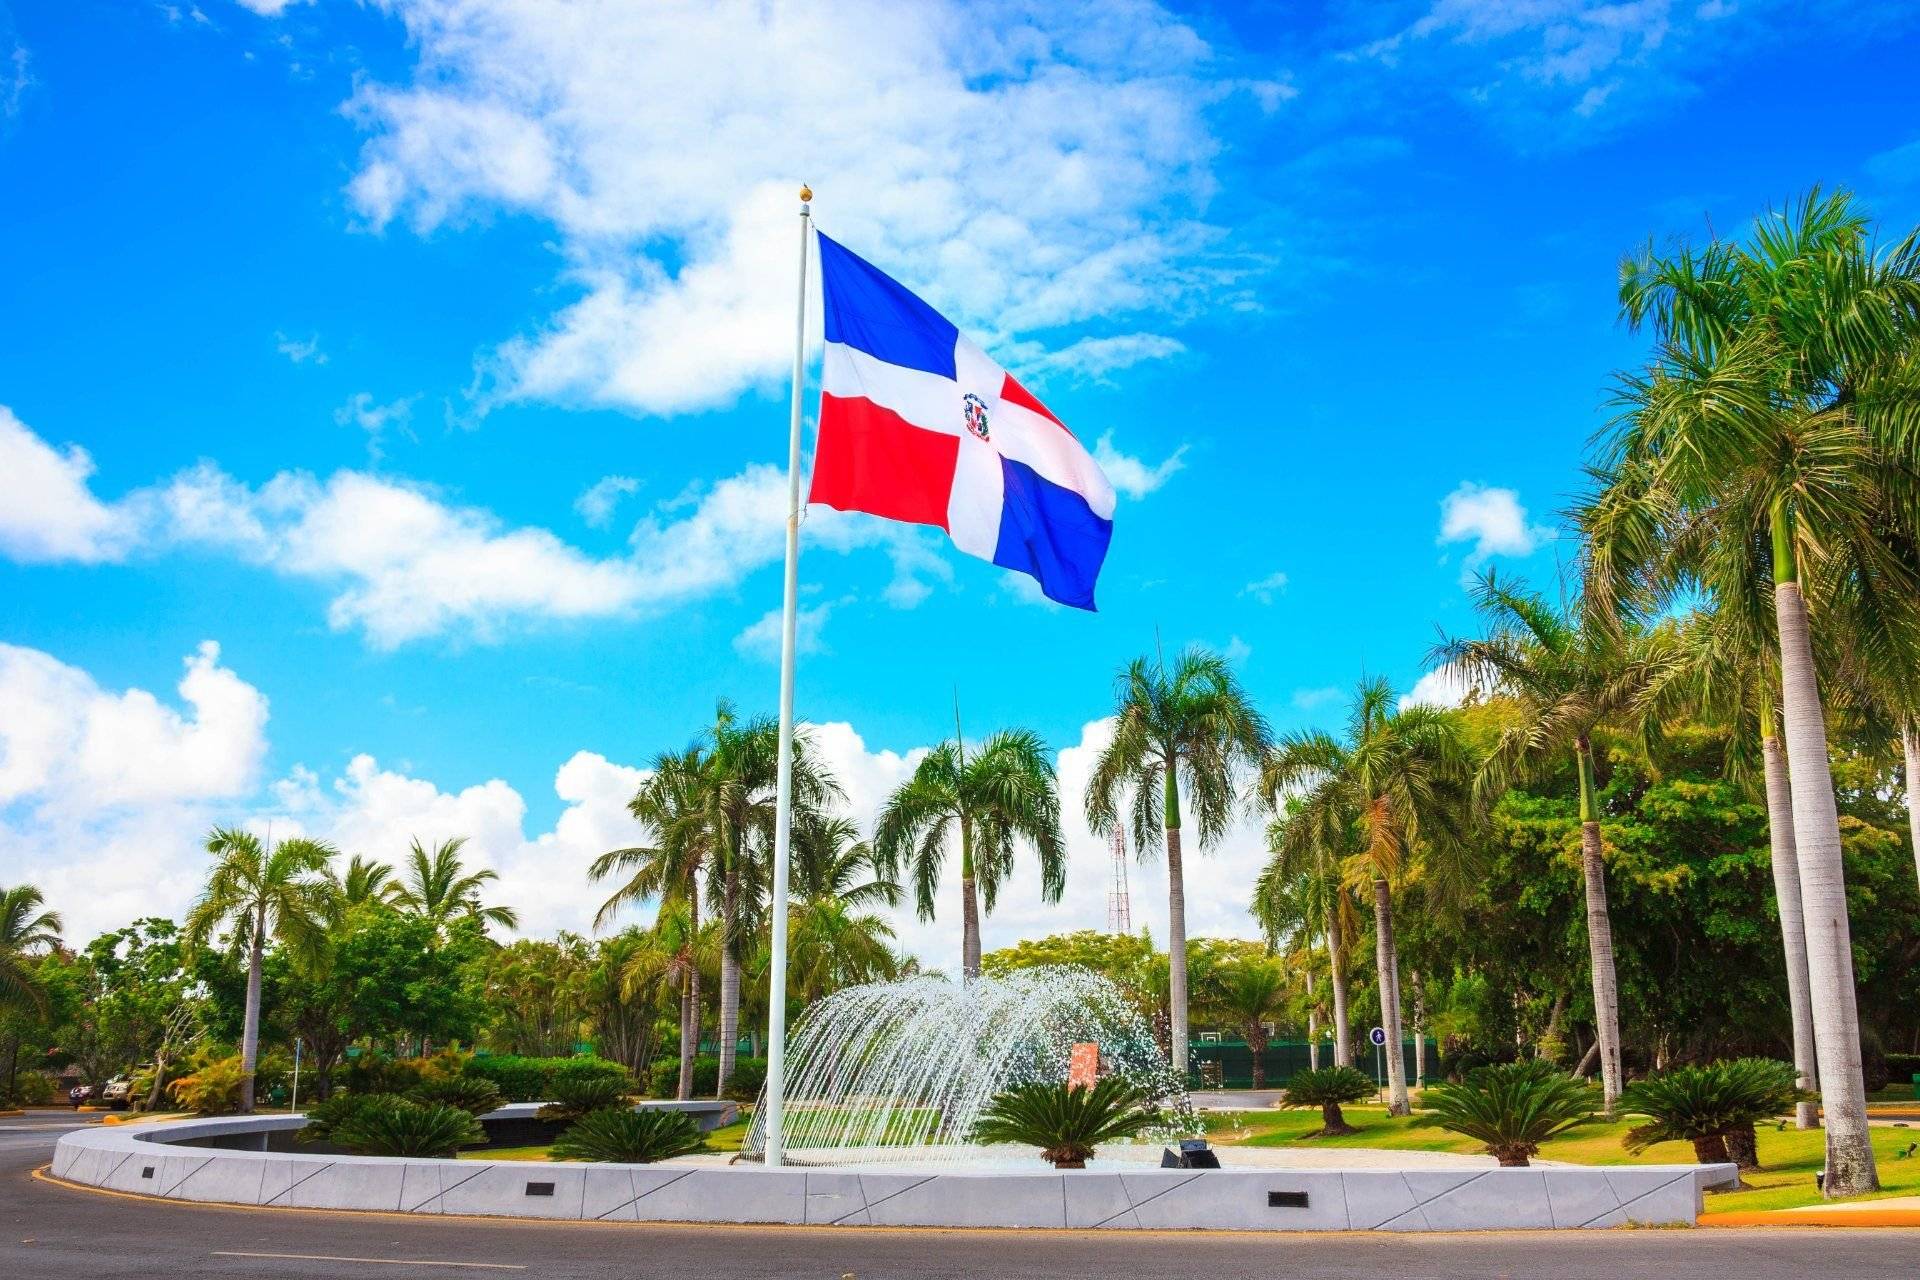 Adios Republica dominicana!